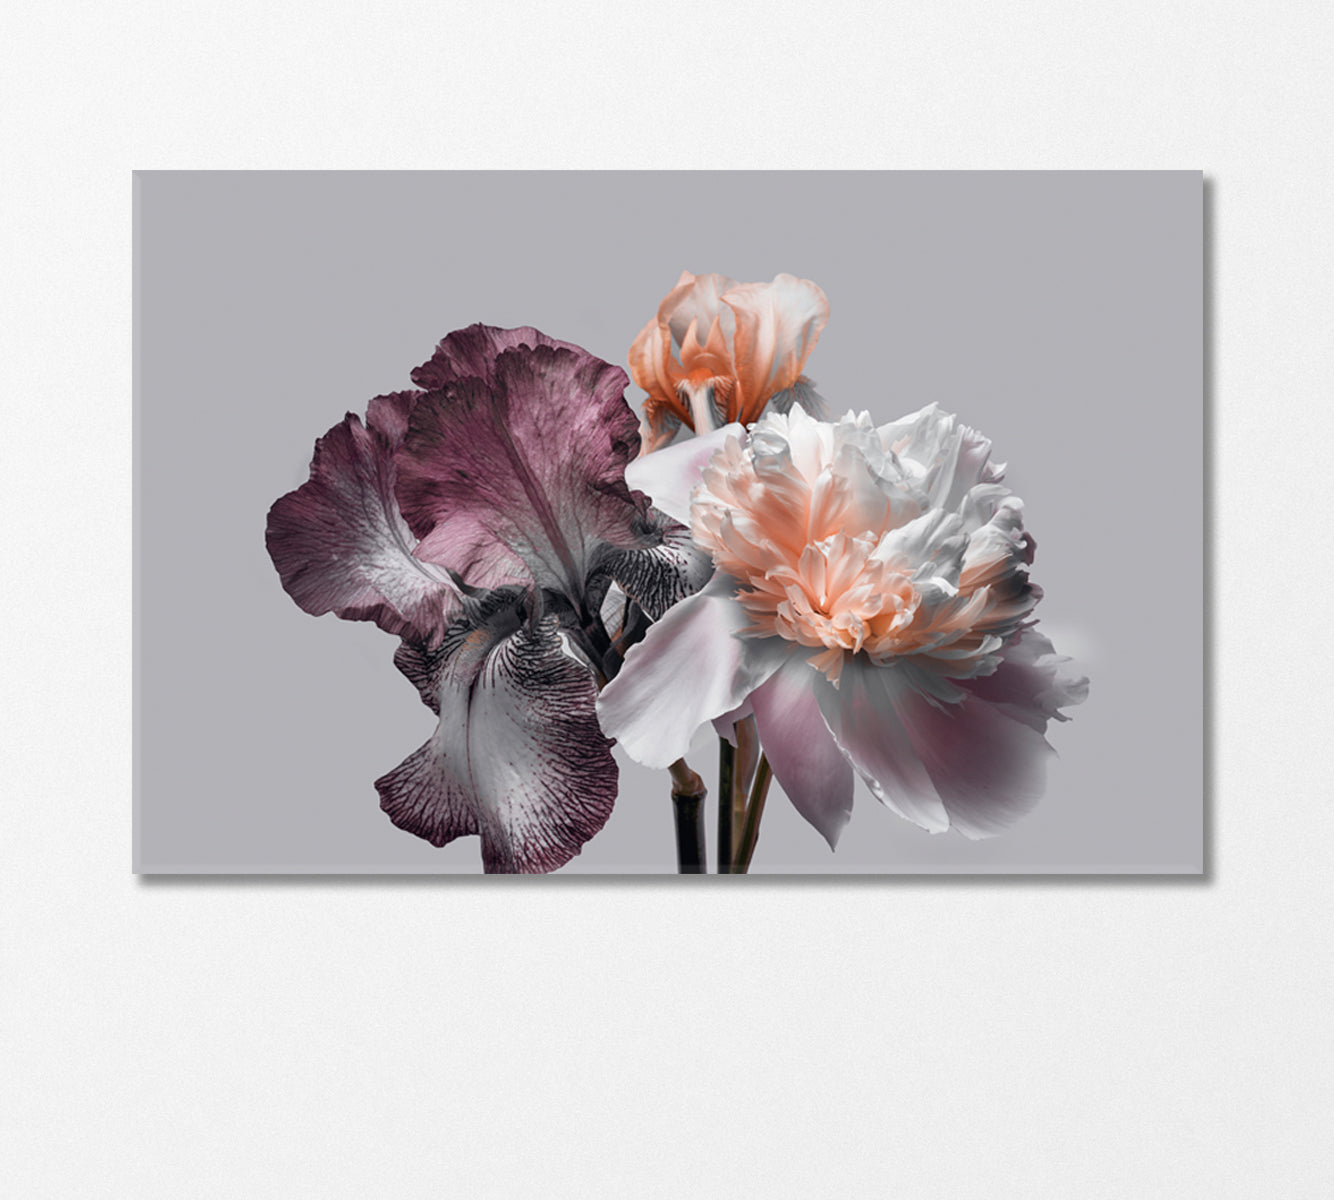 Bouquet of Peonies and Irises Canvas Print-CetArt-1 Panel-24x16 inches-CetArt